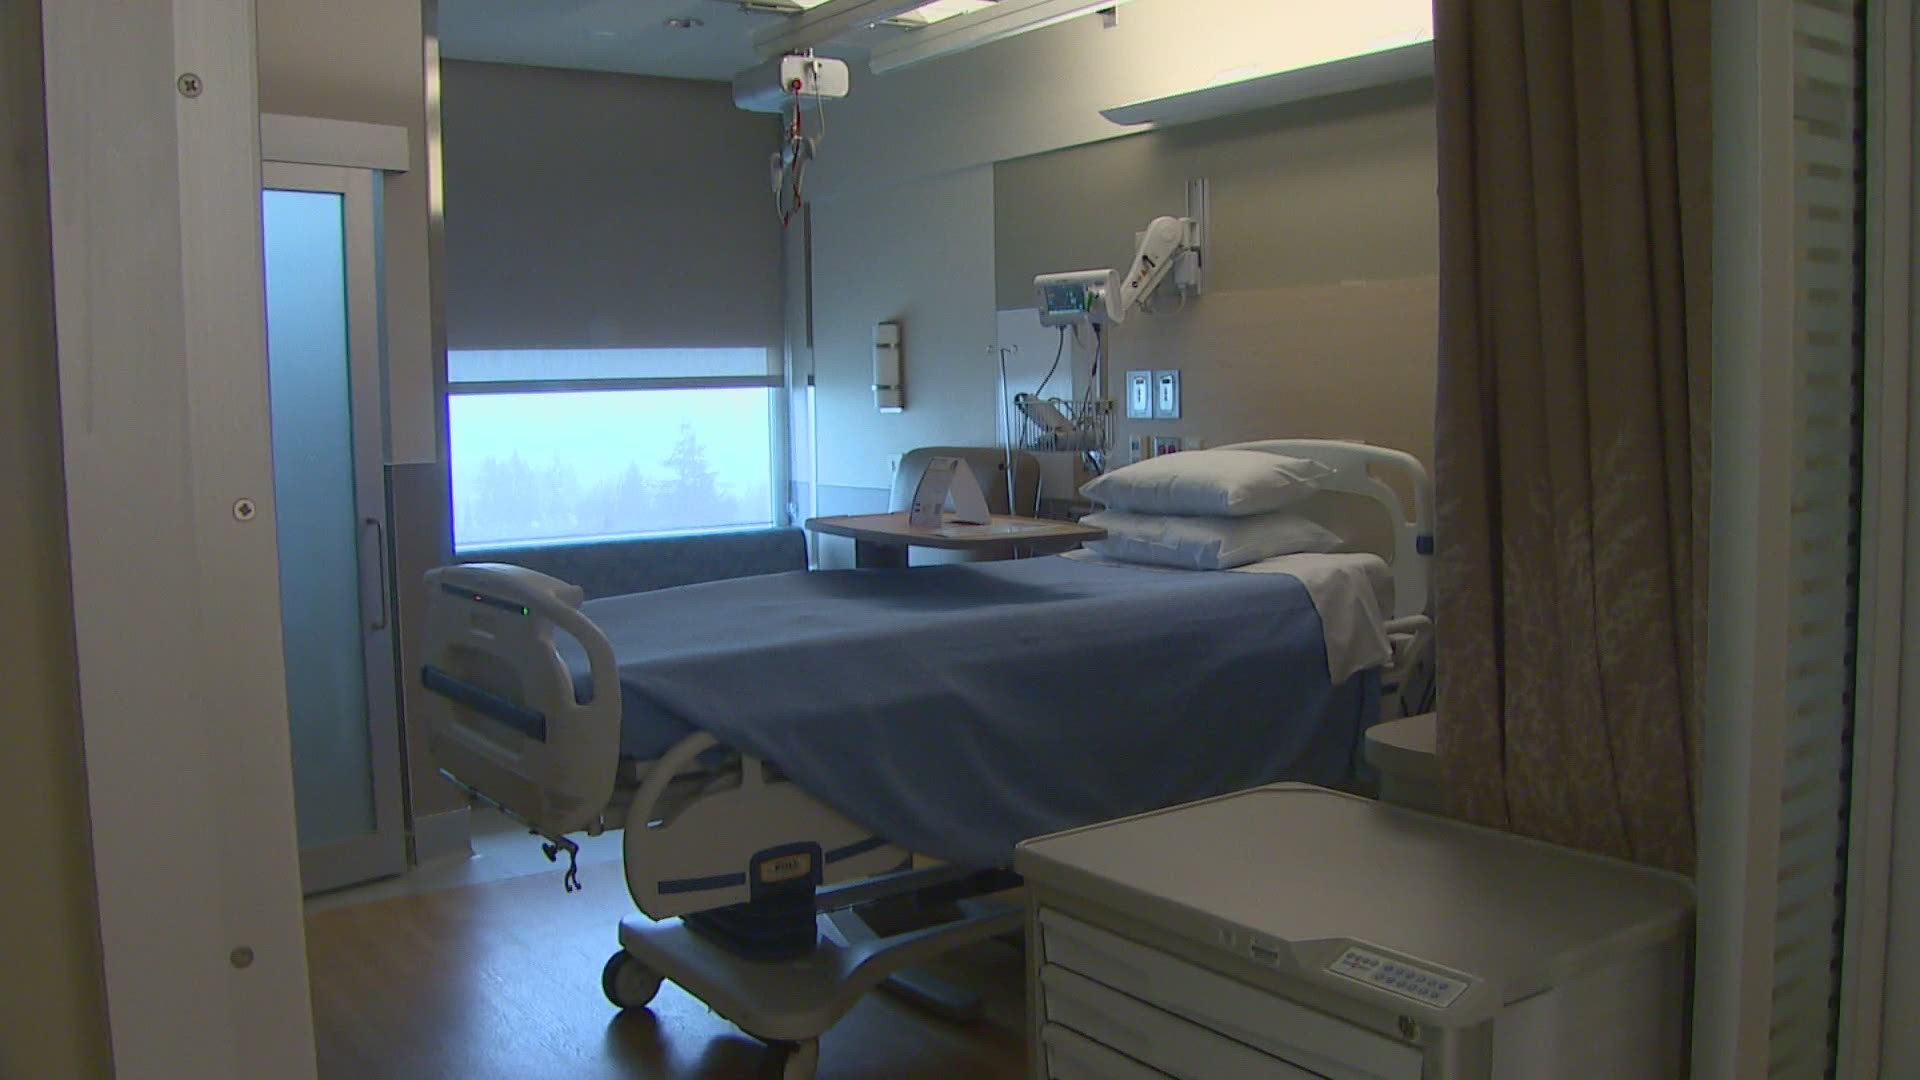 Everett's Providence Regional Medical Center was the tip of the spear in America's battle against coronavirus in early 2020.